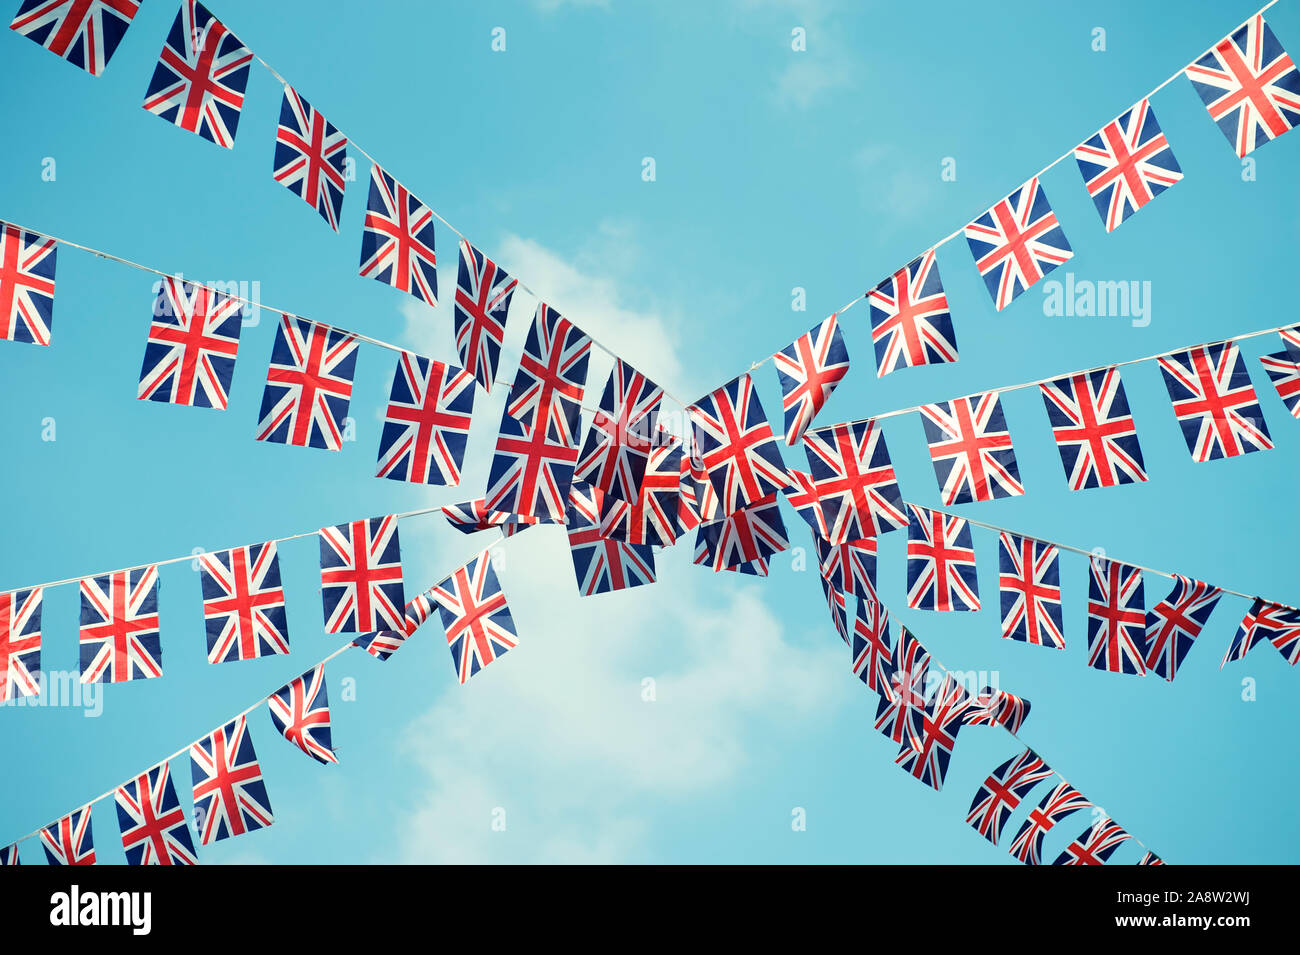 British Union Jack flag bunting strung across soft blue sky Stock Photo